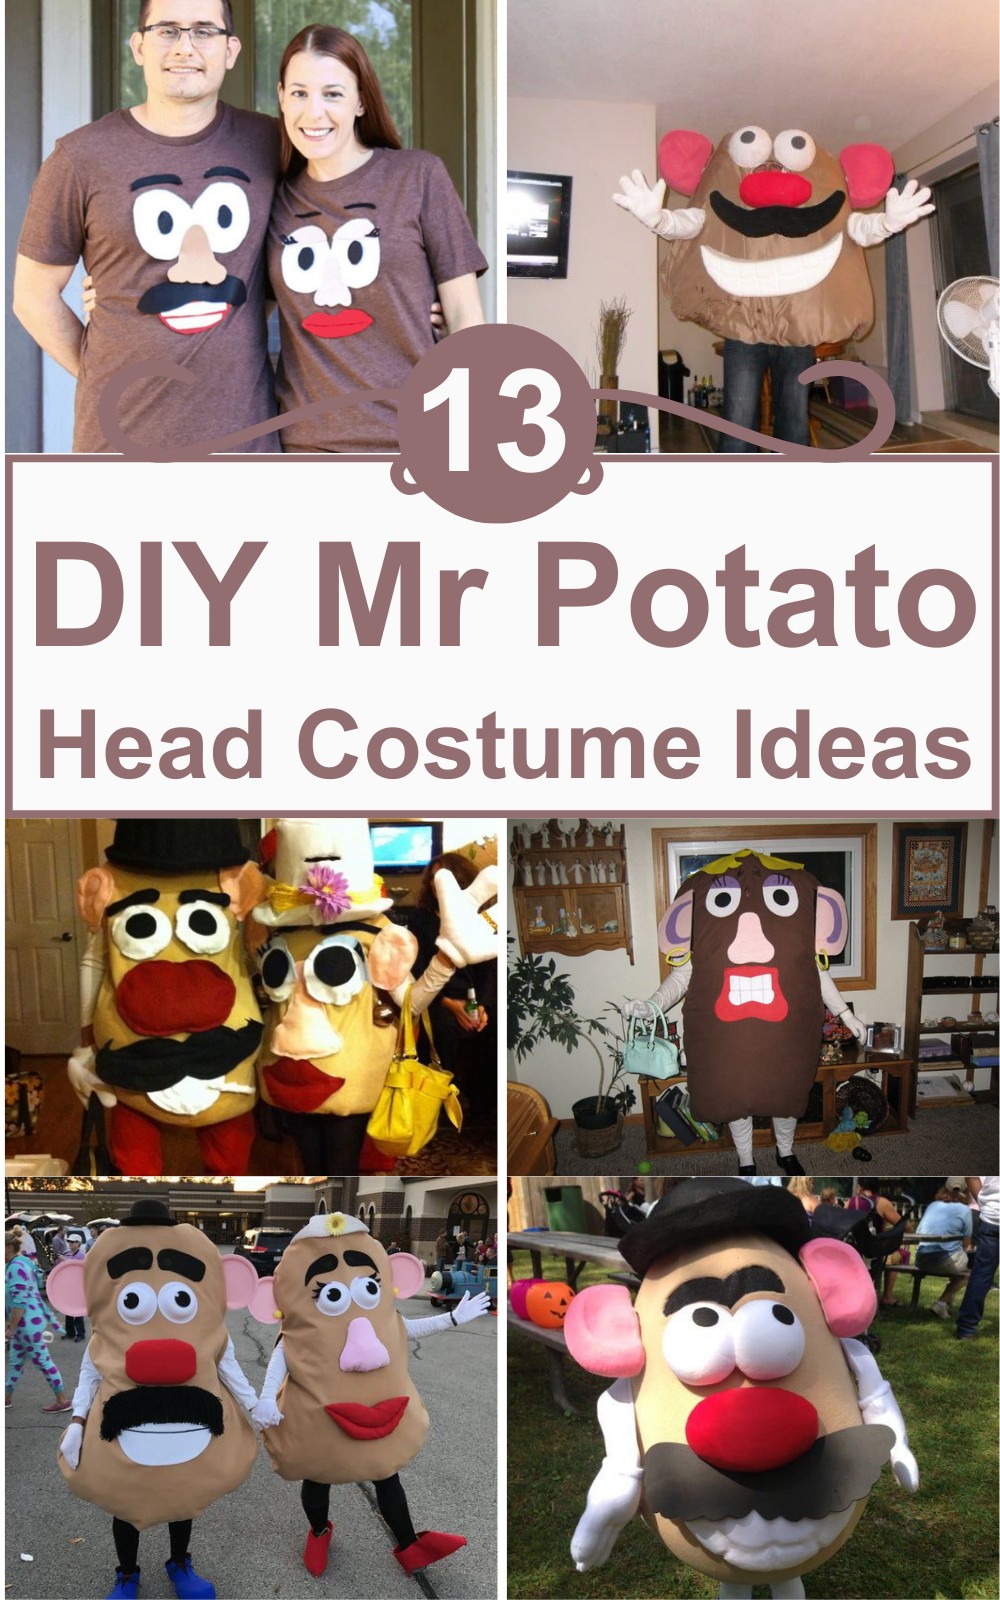 13 DIY Mr Potato Head Costume Ideas